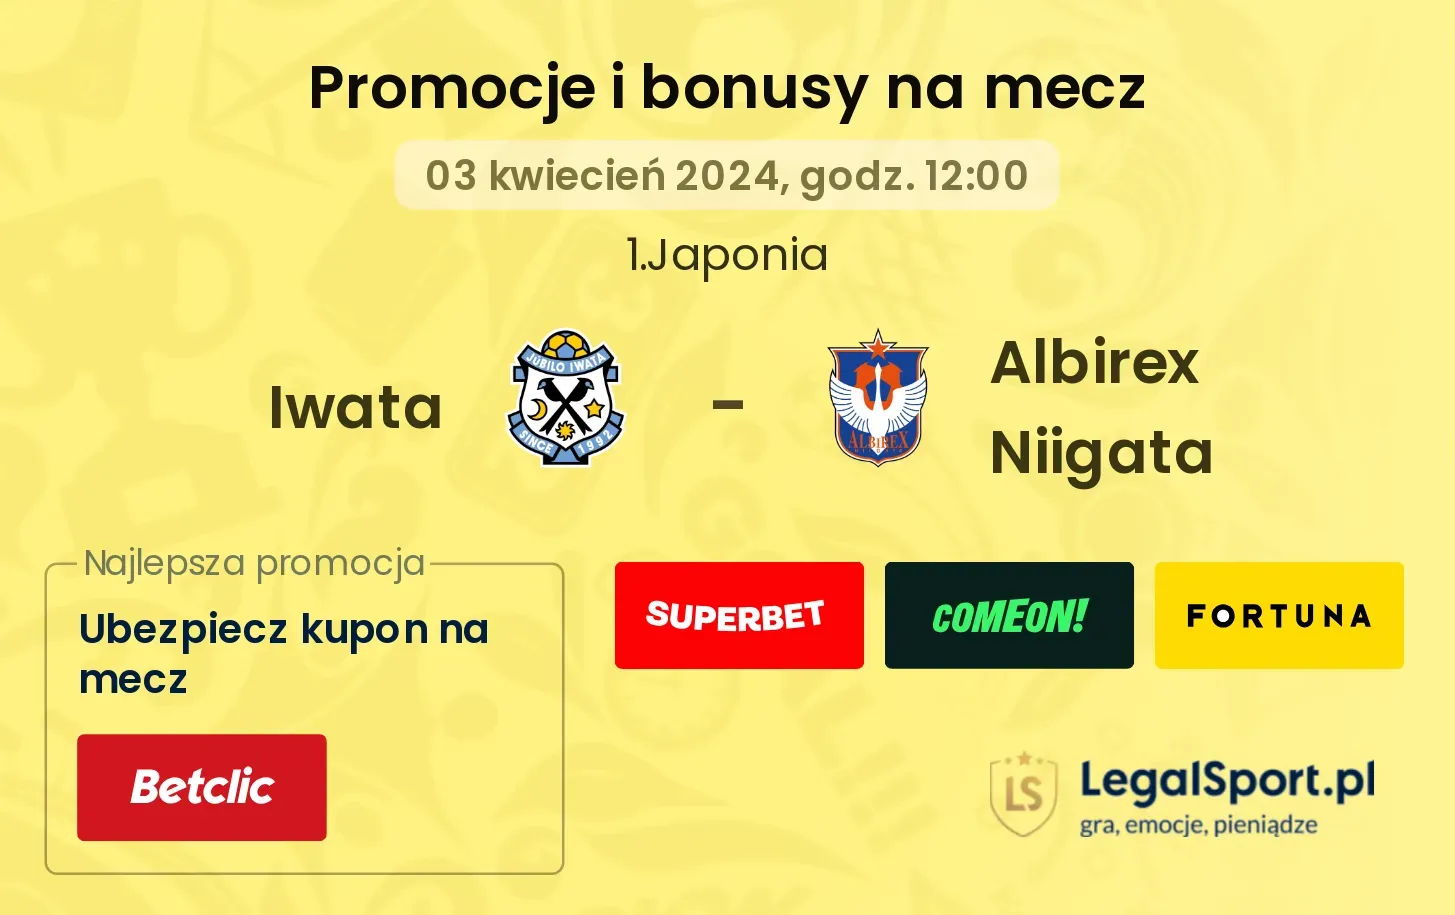 Iwata - Albirex Niigata promocje bonusy na mecz